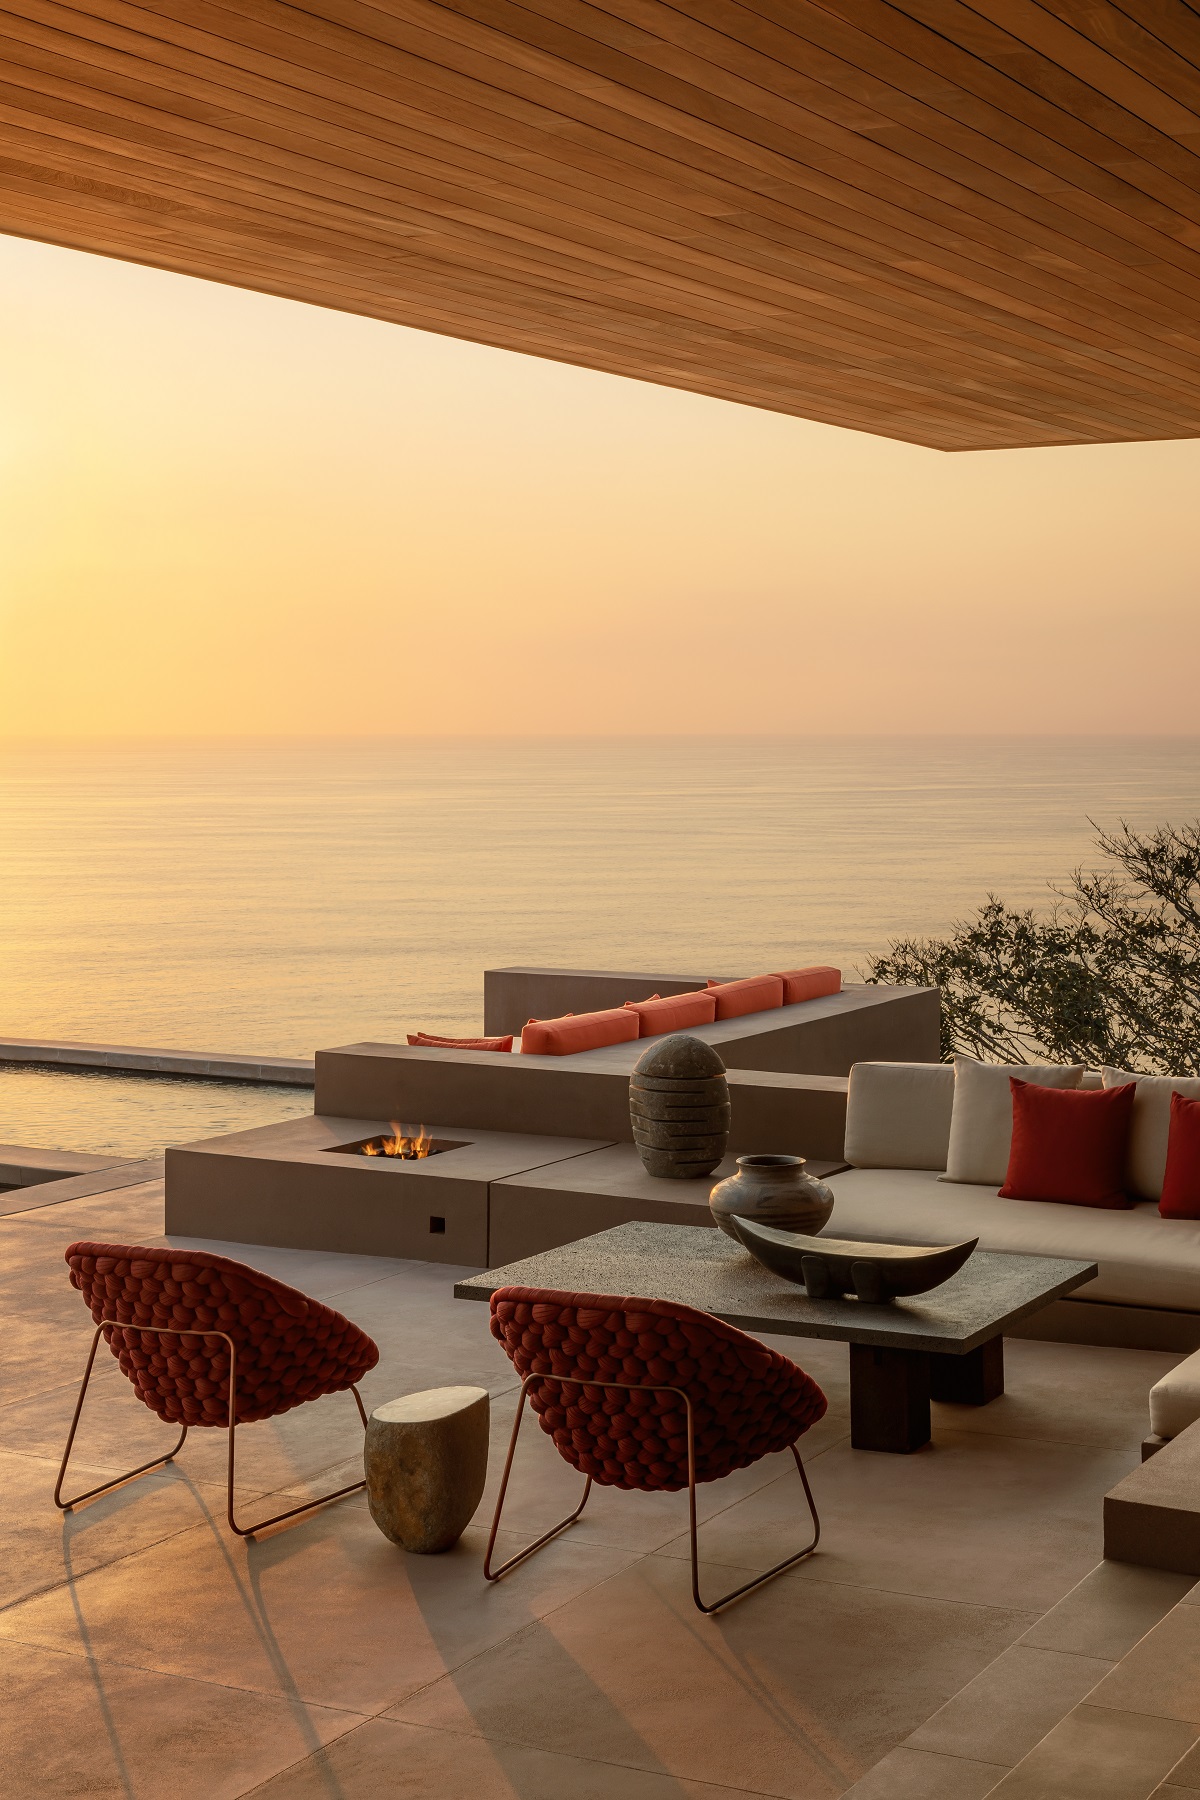 sunset and seating on terrace of Villa at Mandarina